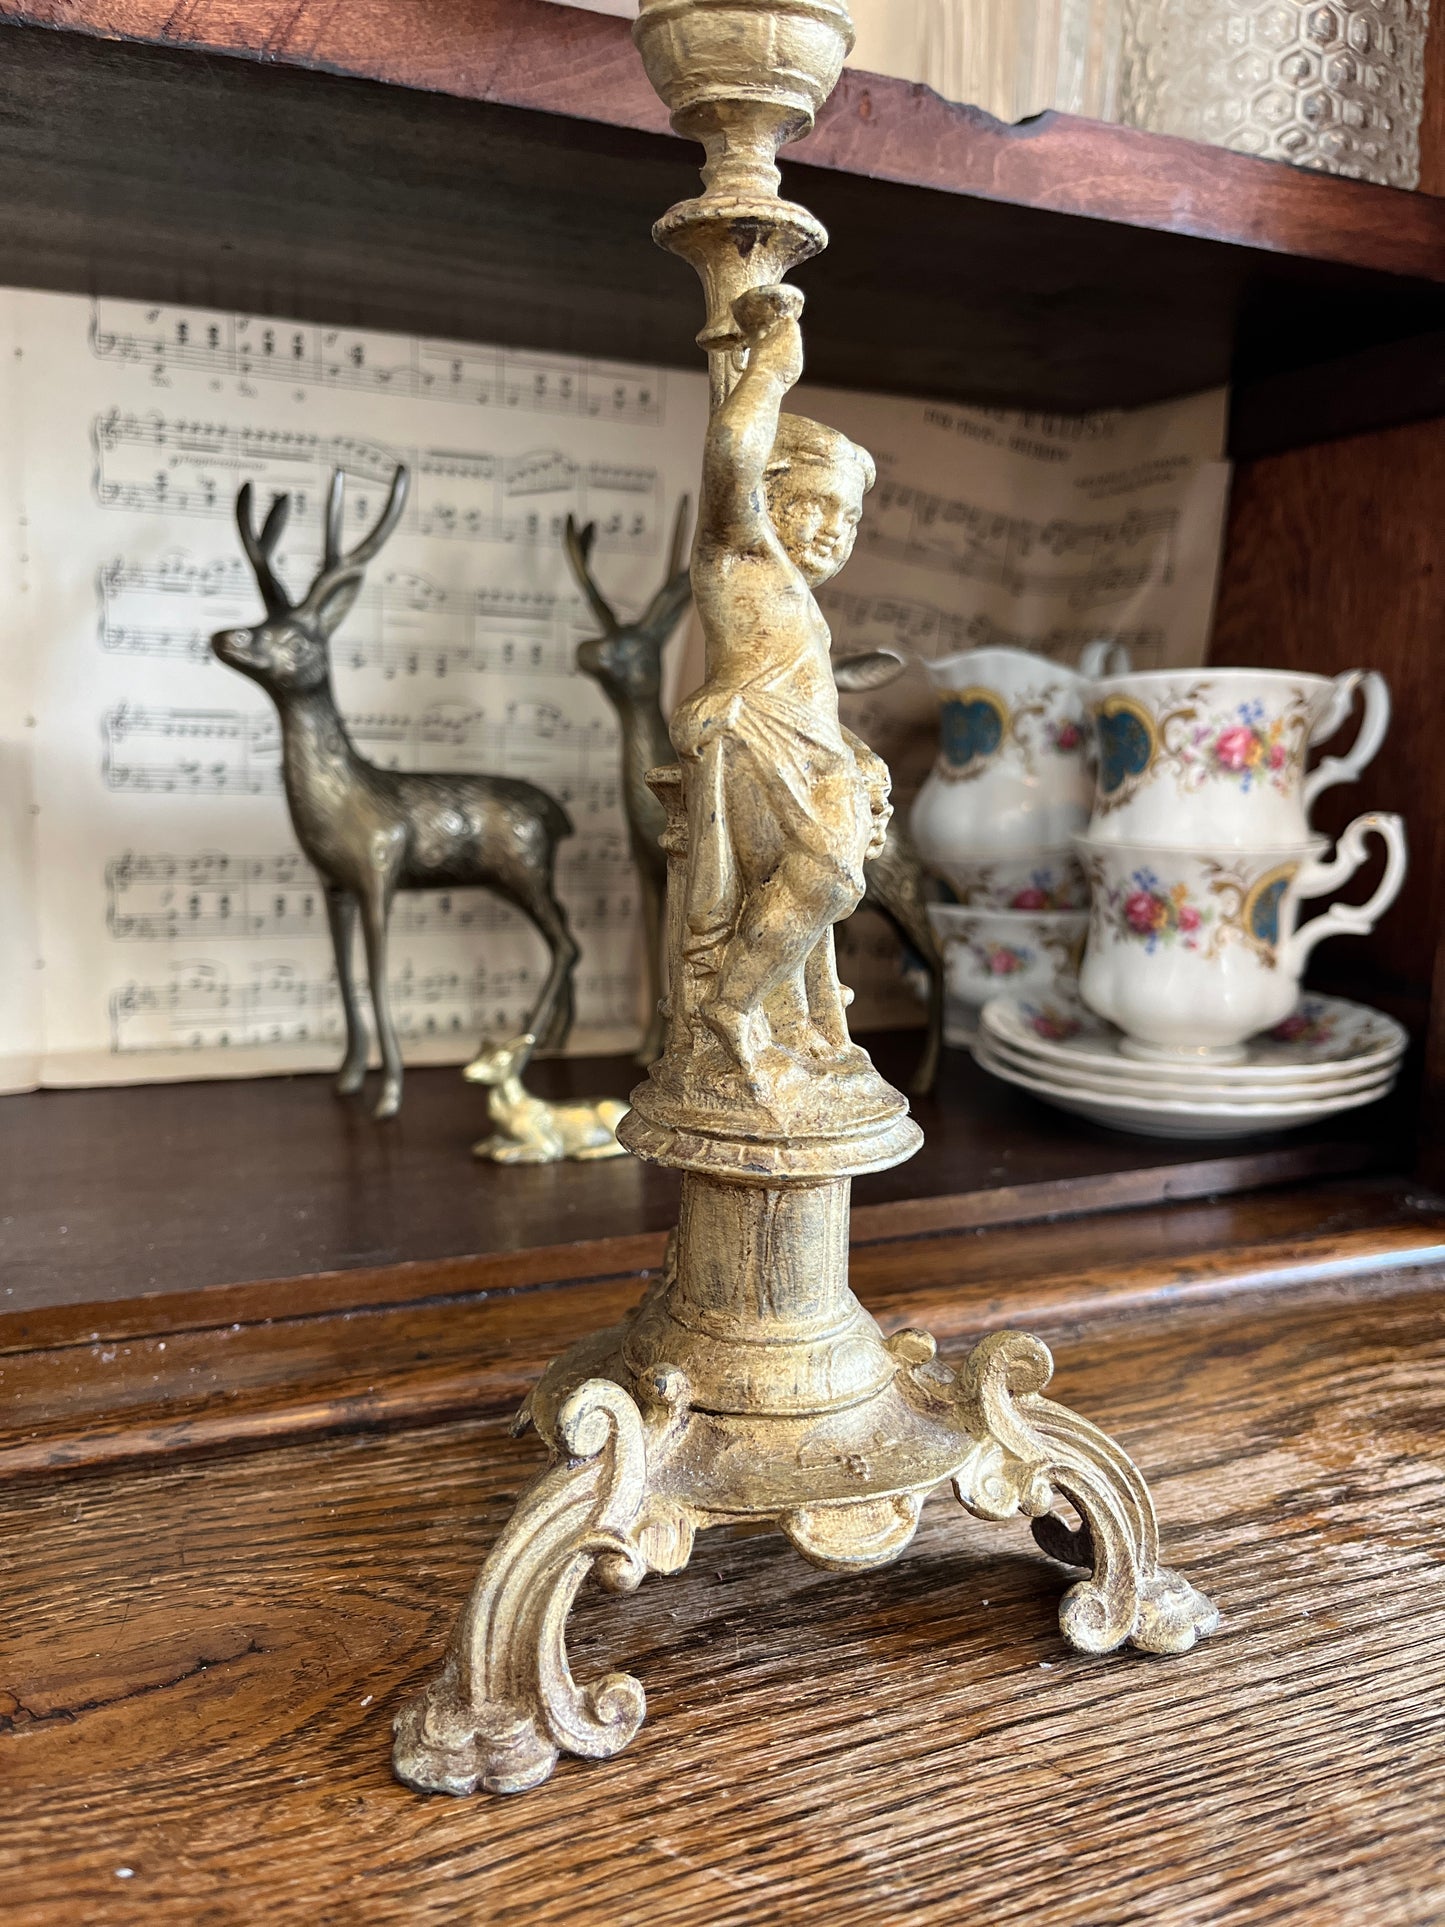 Antique candlestick figure